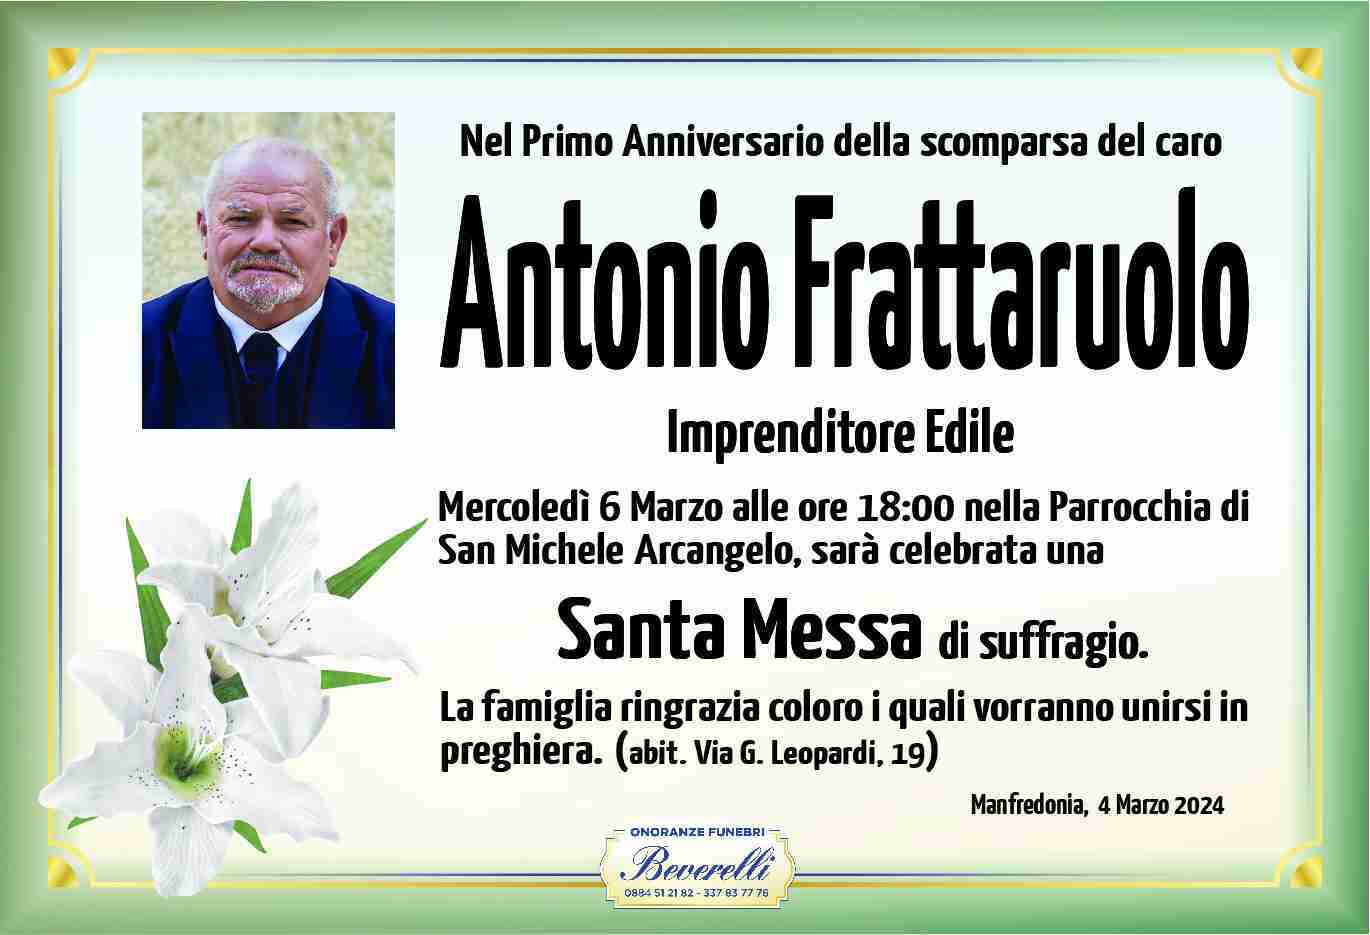 Antonio Frattaruolo